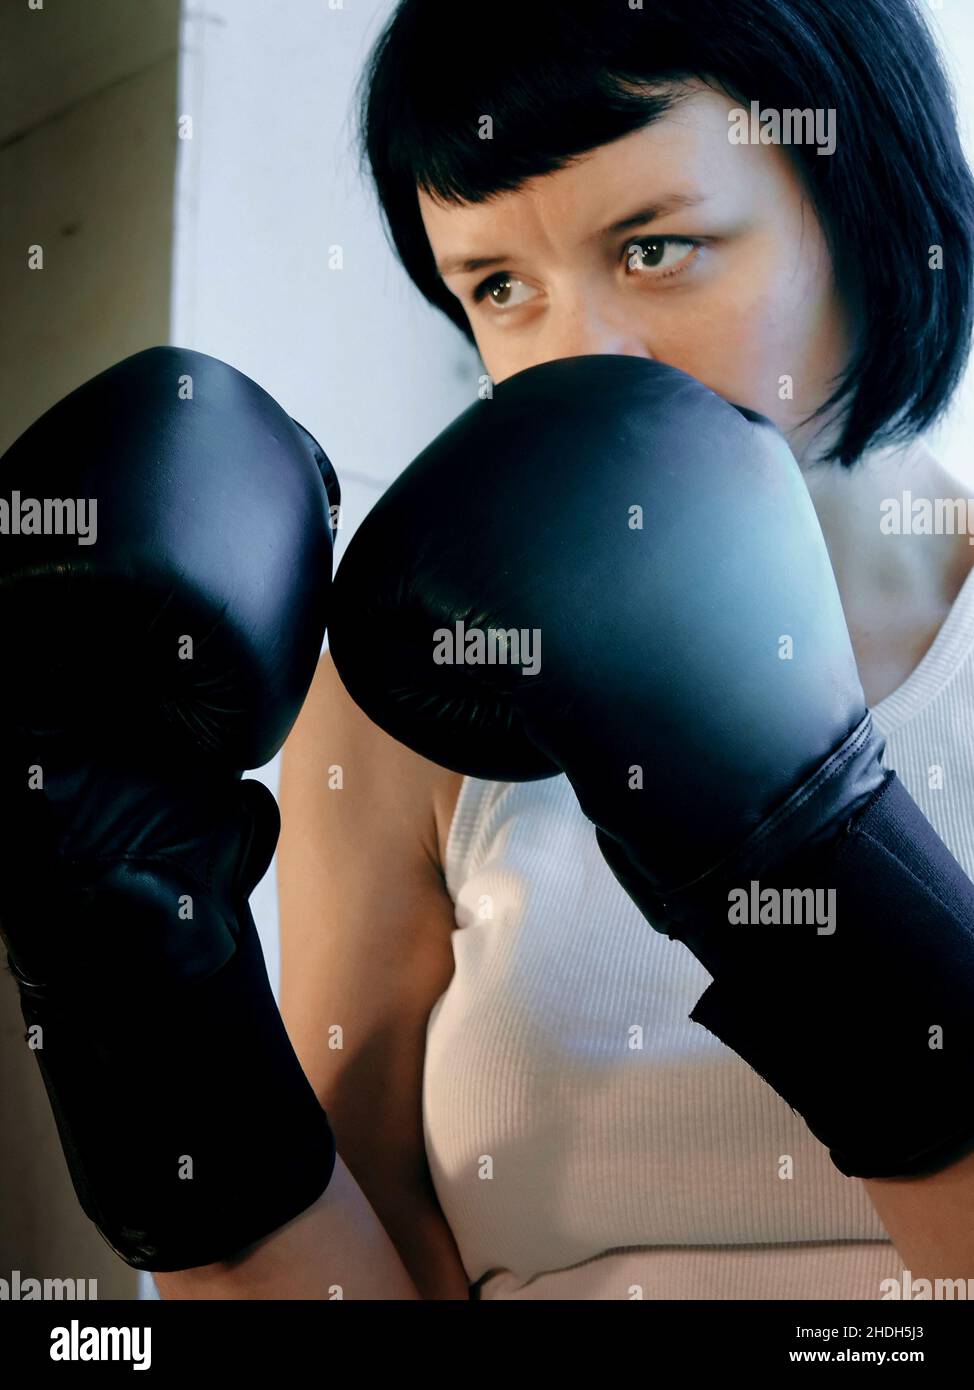 militant, boxing gloves, boxer, militants, boxing glove, boxers Stock Photo